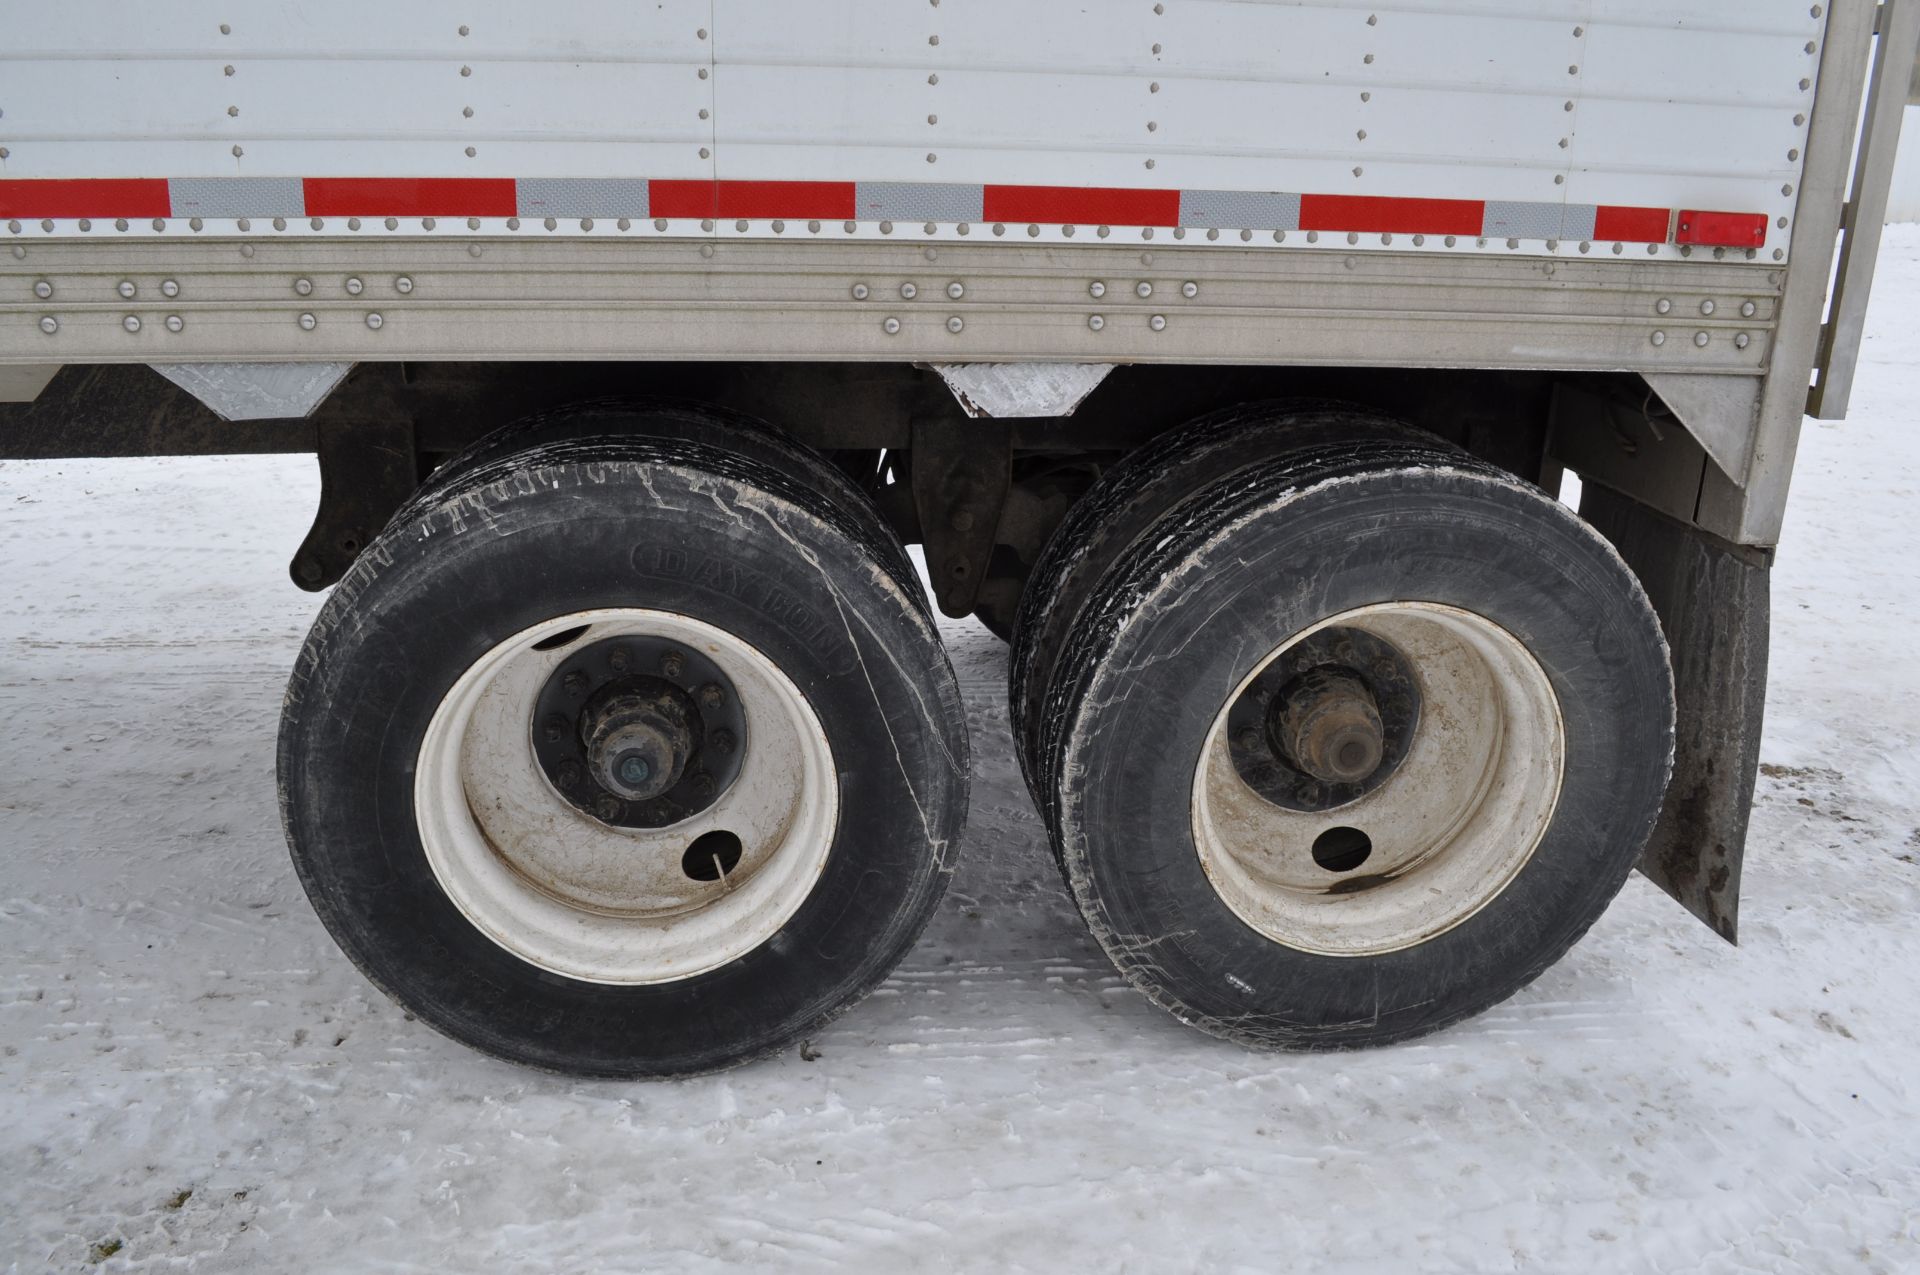 1993 42’ Timpte hopper bottom trailer, spring ride, 11R24.5 tires, roll tarp, VIN H42221PB084815 - Image 13 of 19